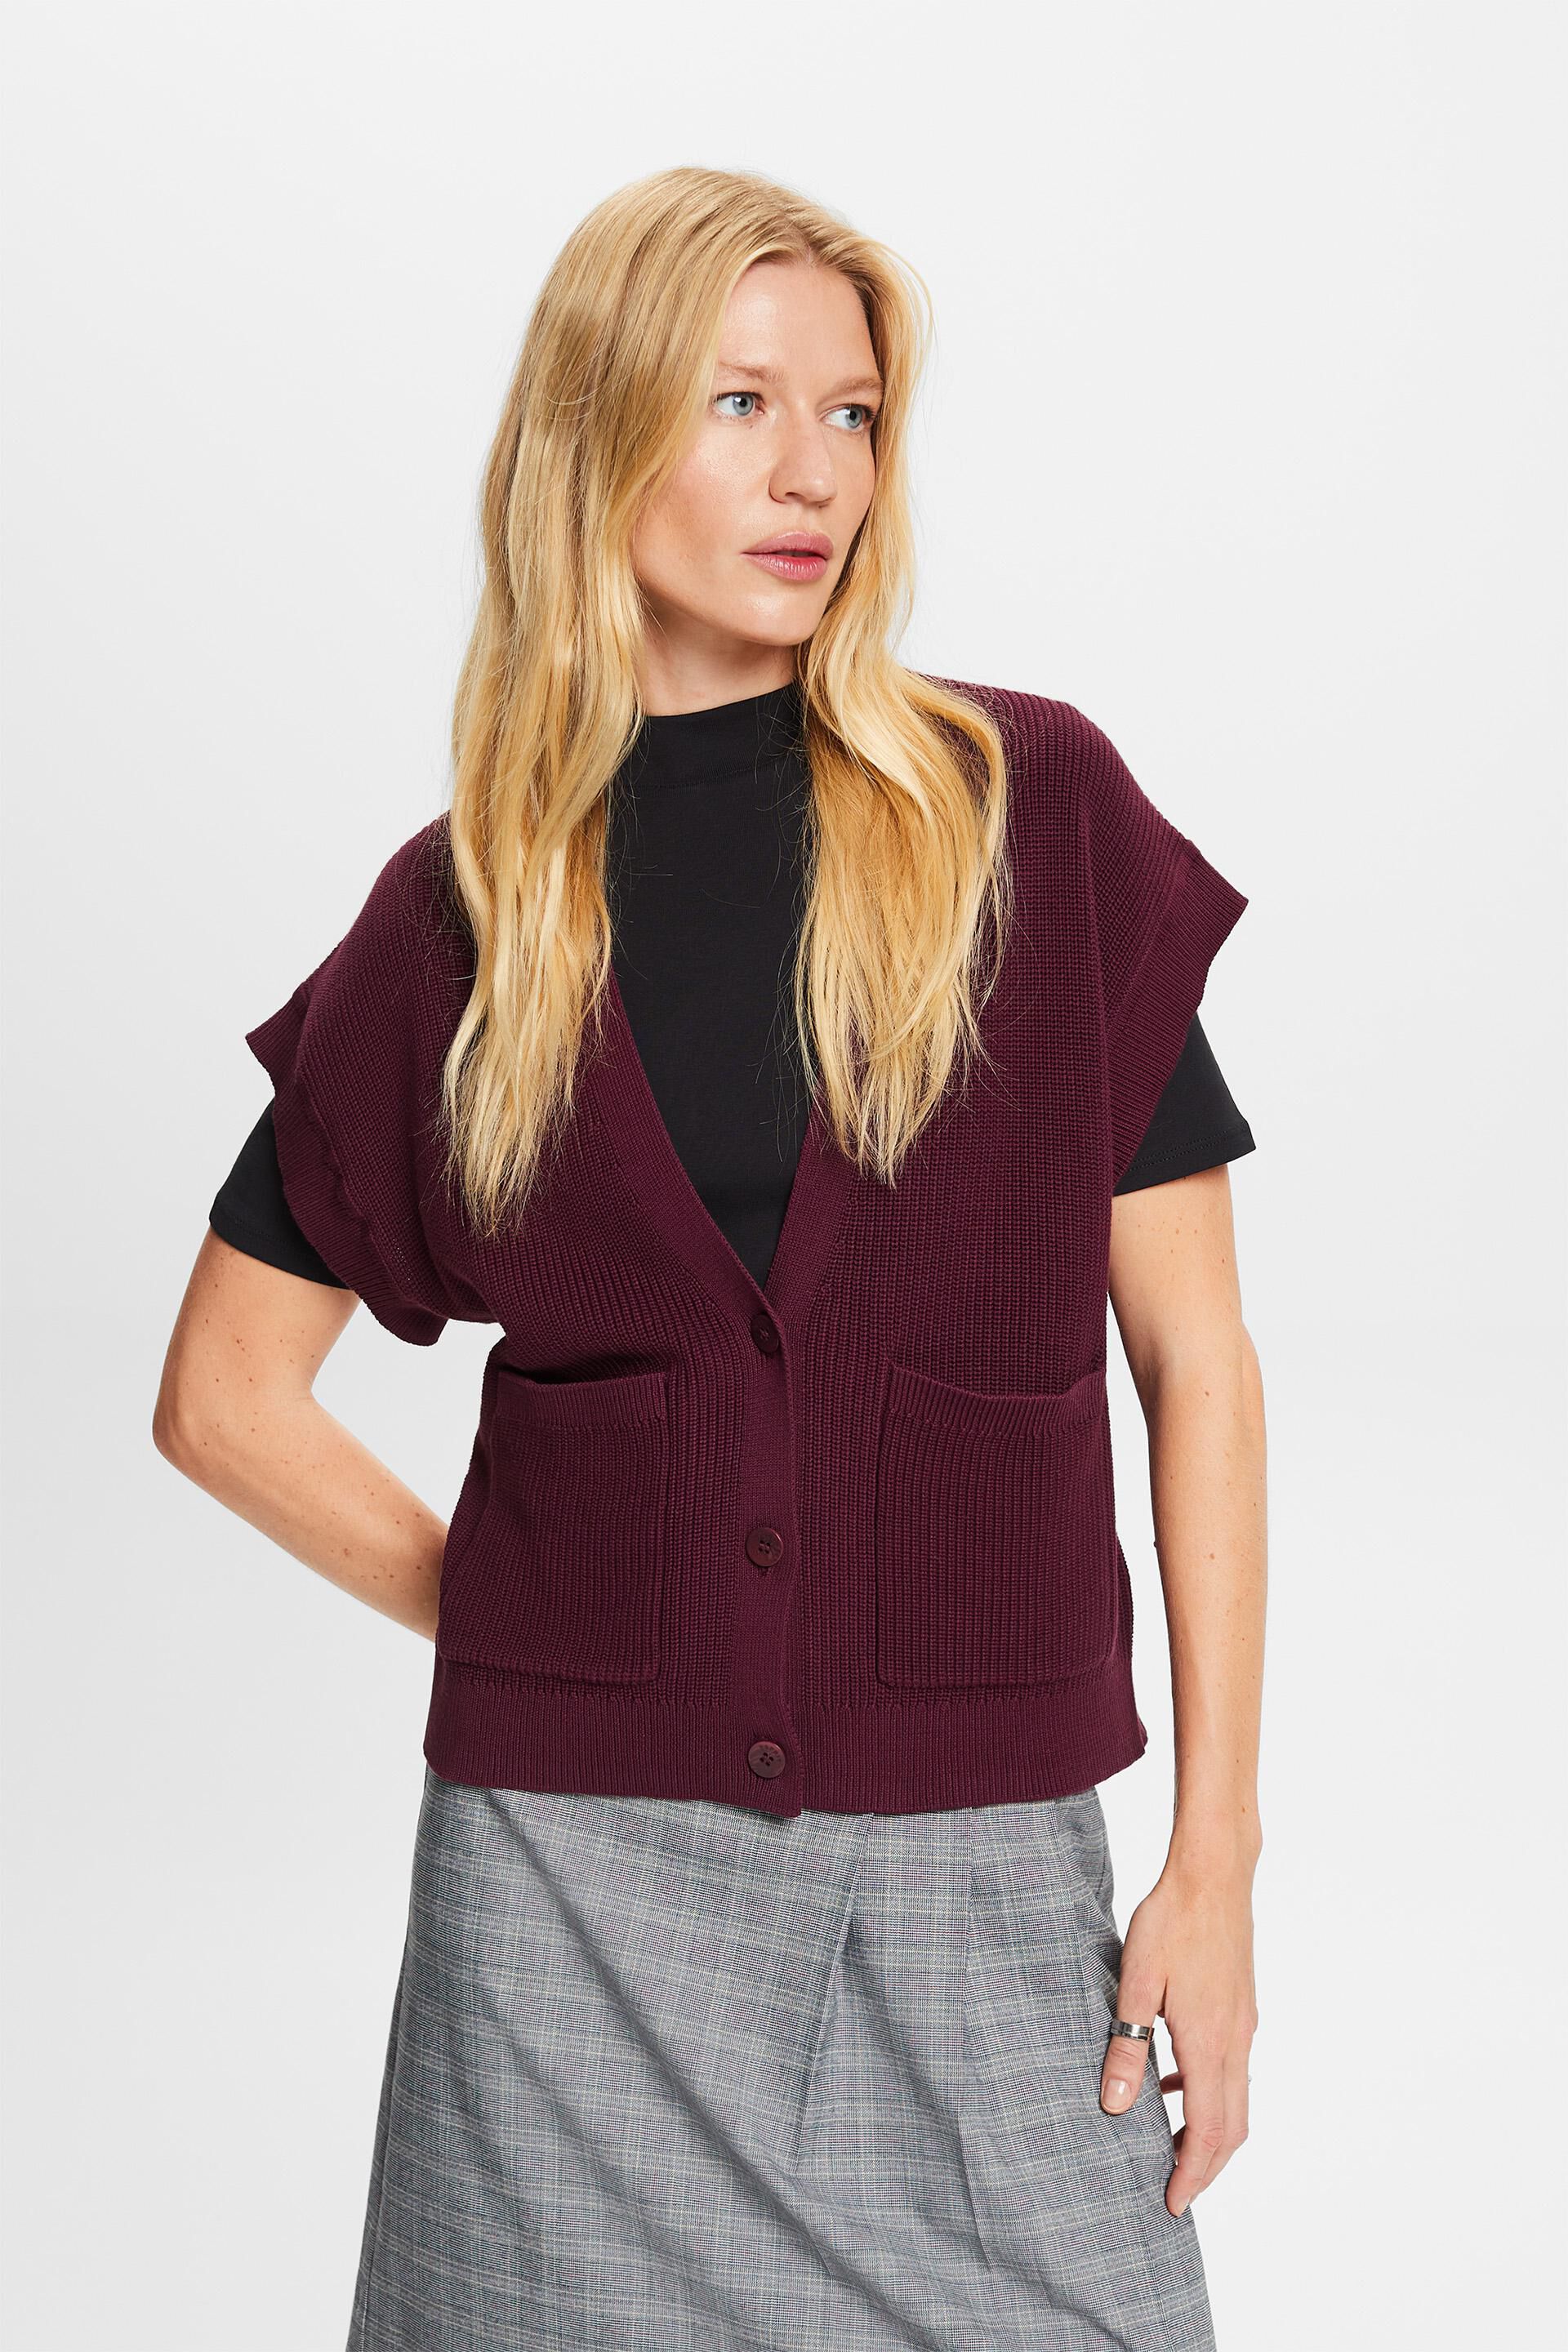 Esprit 100% cardigan, cotton Sleeveless